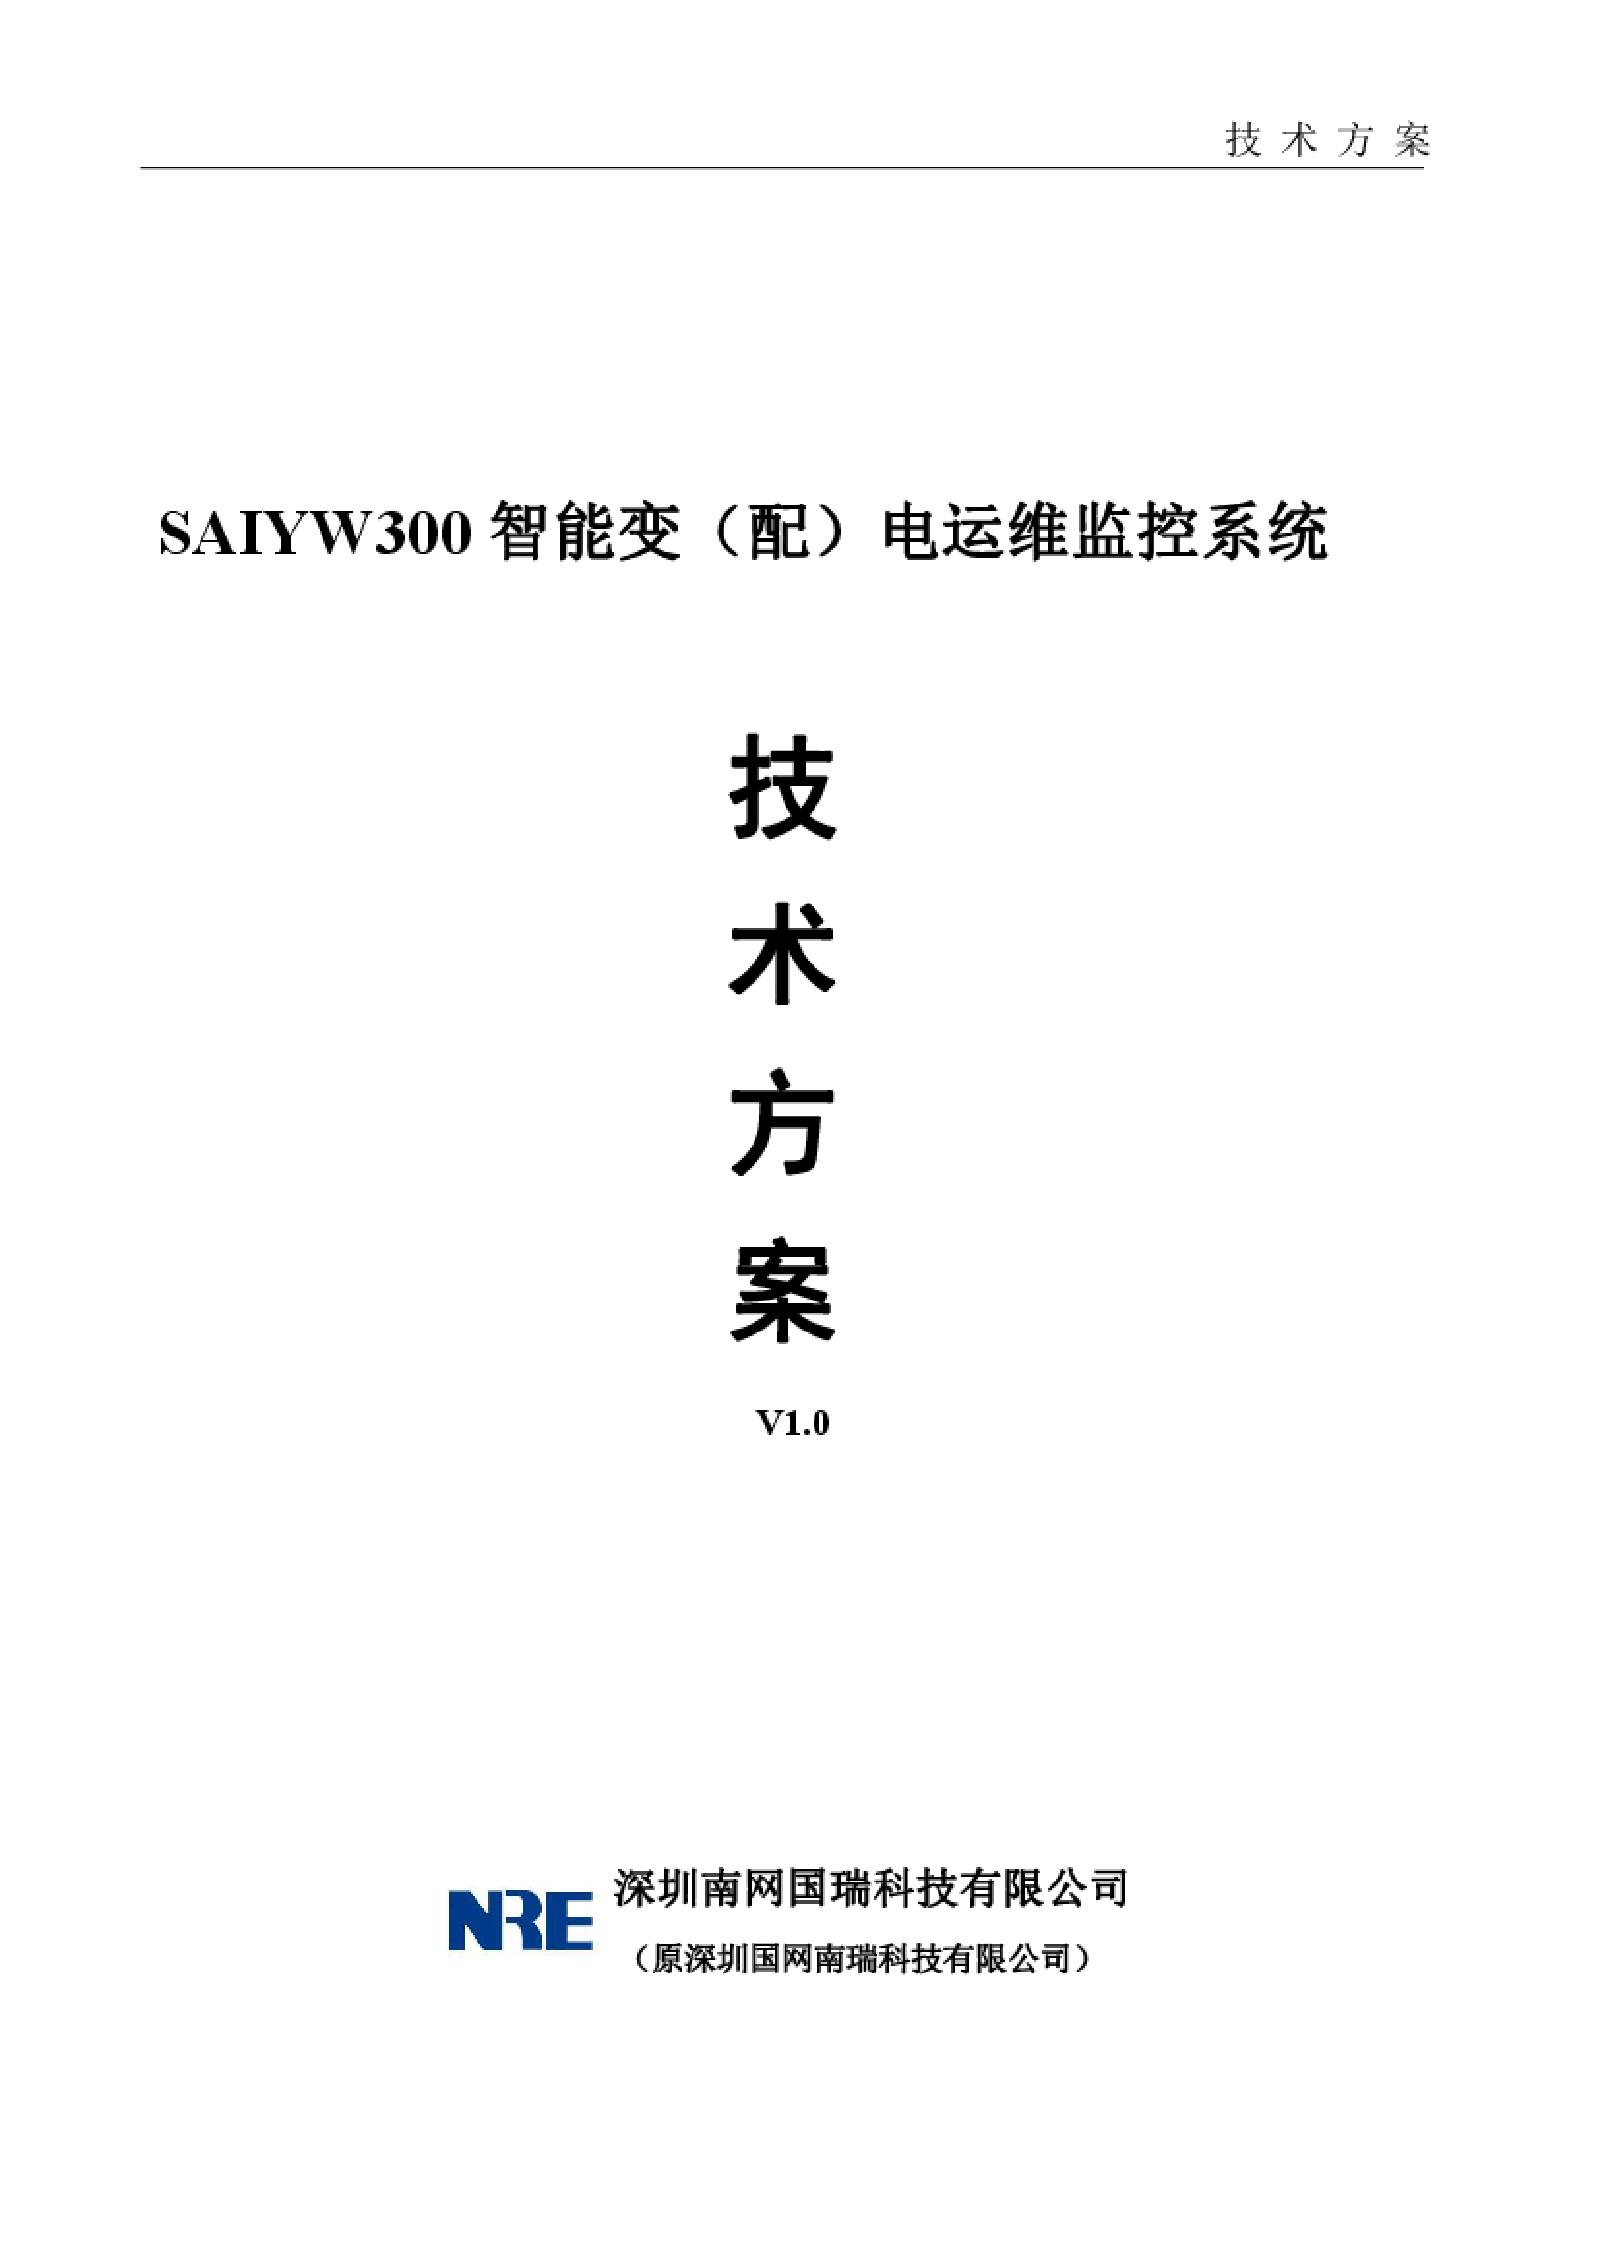 SAIYW300 智能变（配）电运维监控系统